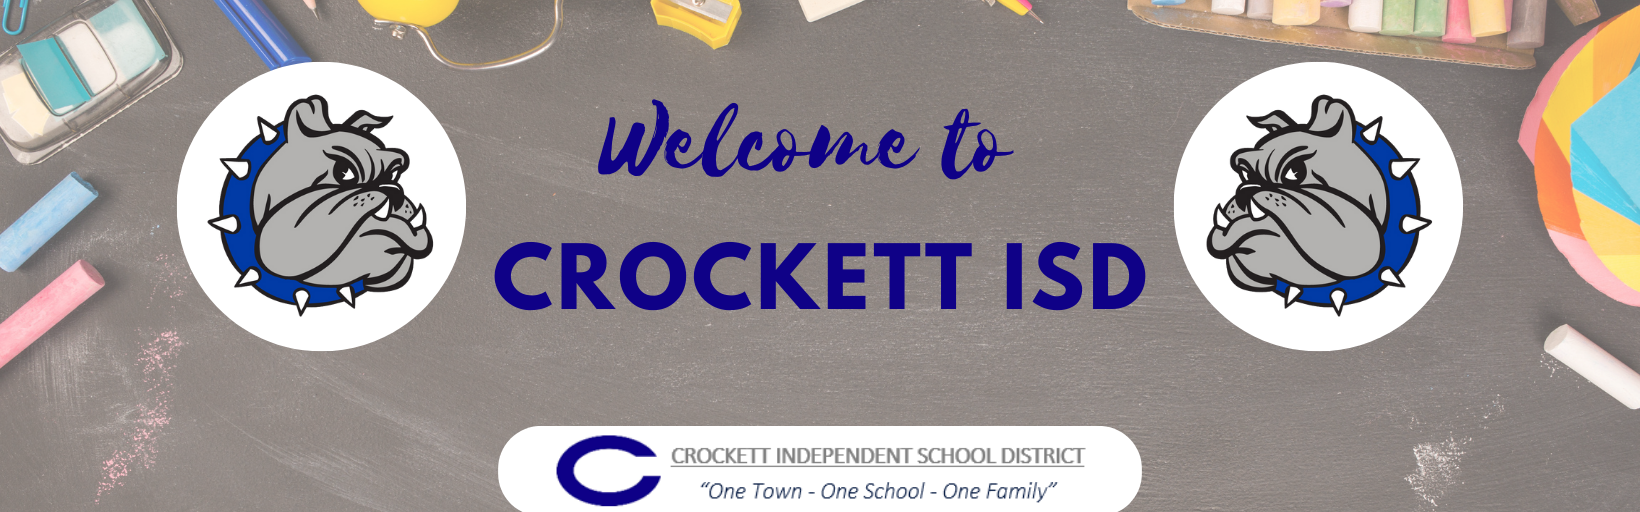 welcome to crockett isd